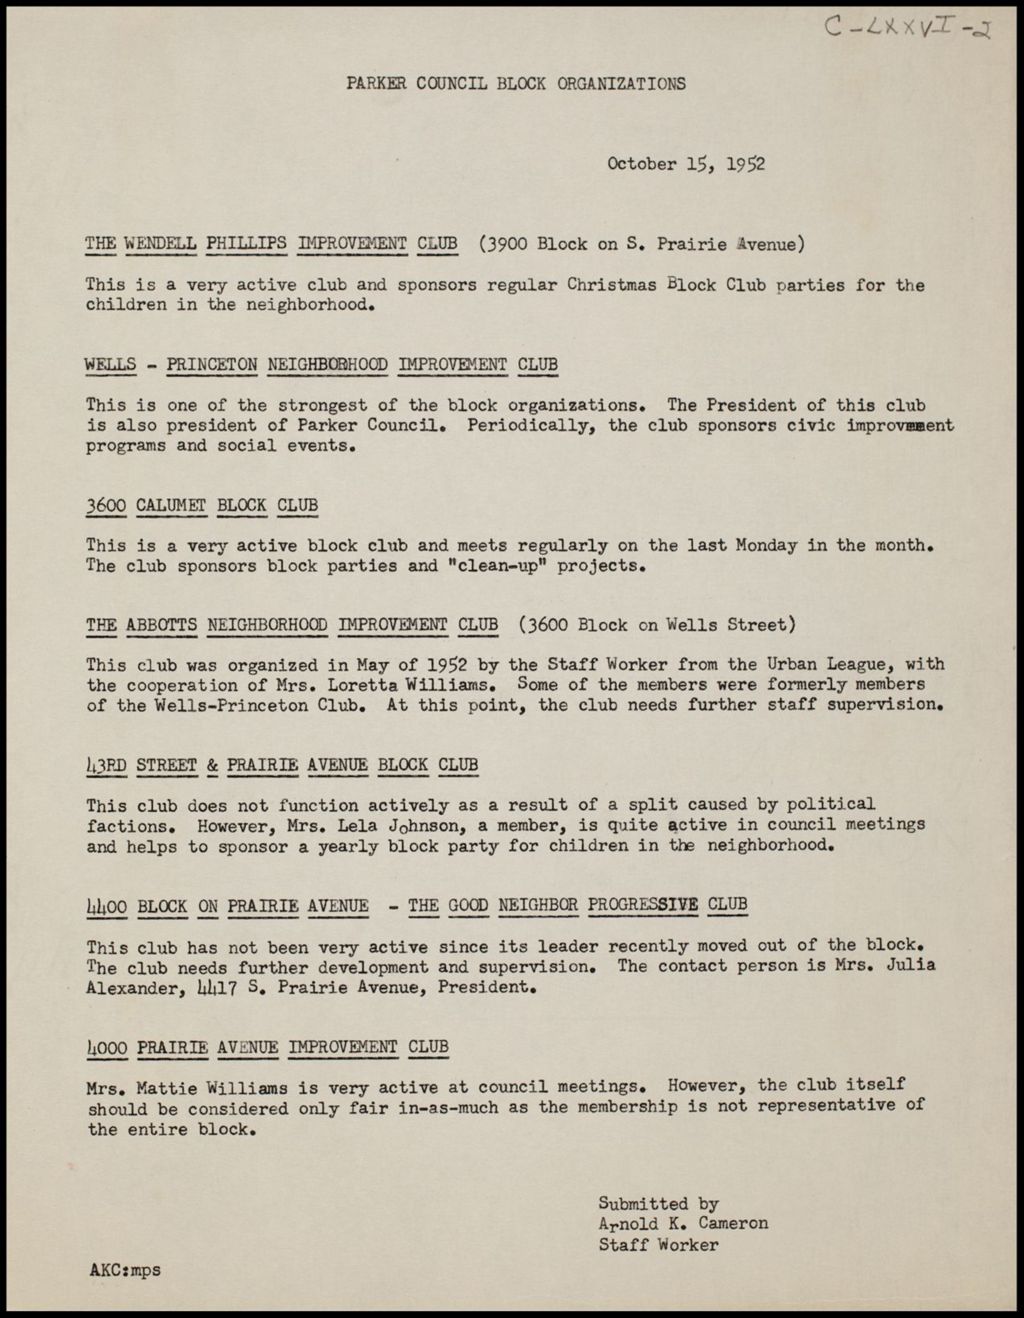 Miniature of Parker Council reports, 1952-1954 (Folder I-2675)